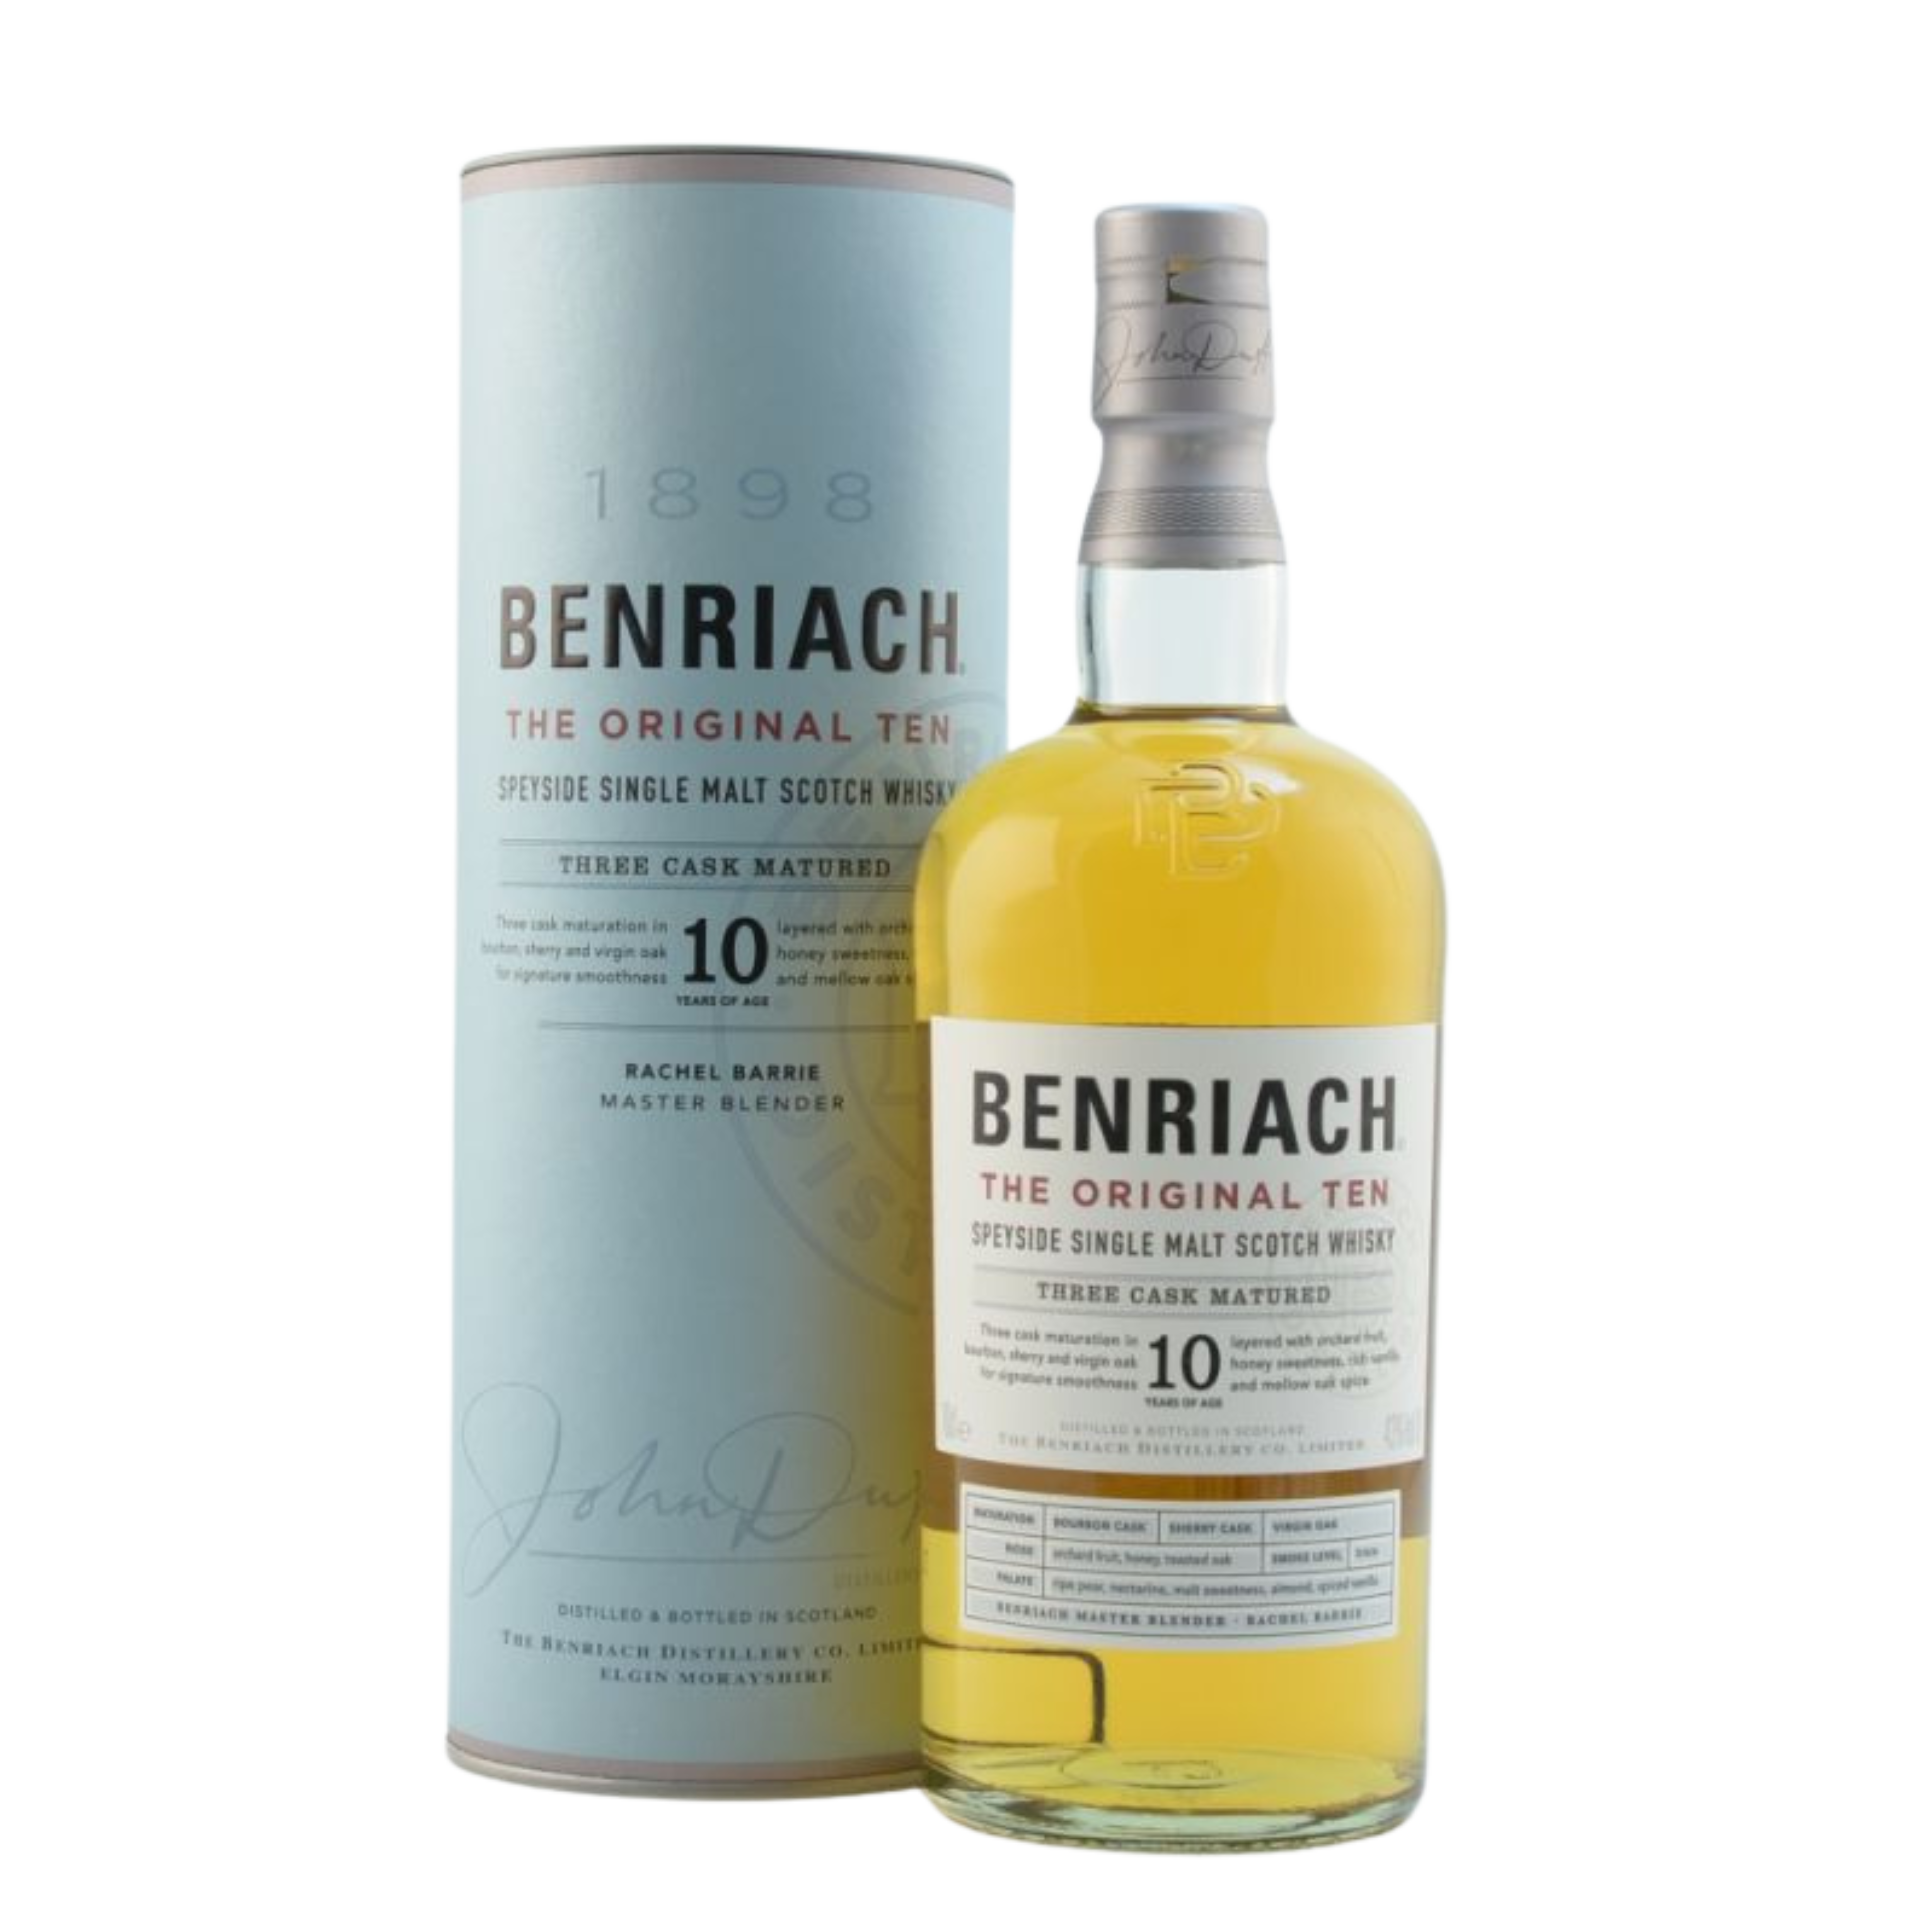 BenRiach "The Original Ten" Speyside Single Malt Scotch Whisky 43% 0,7l